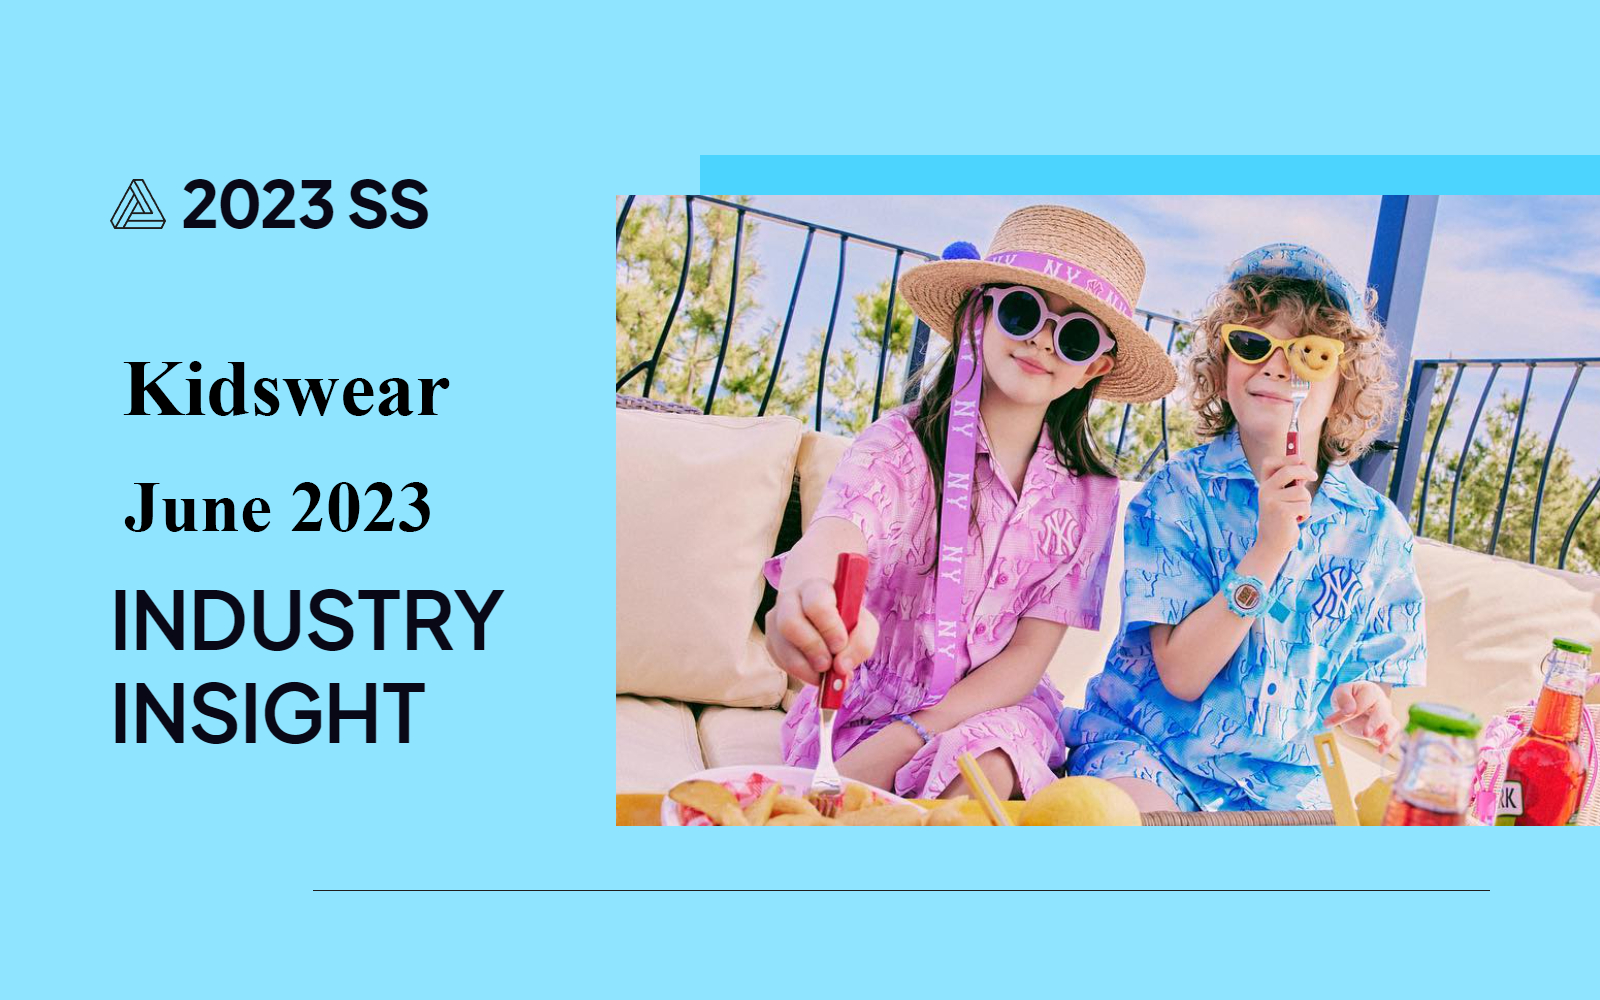 June 2023 -- The Industry Insight of Kidswear